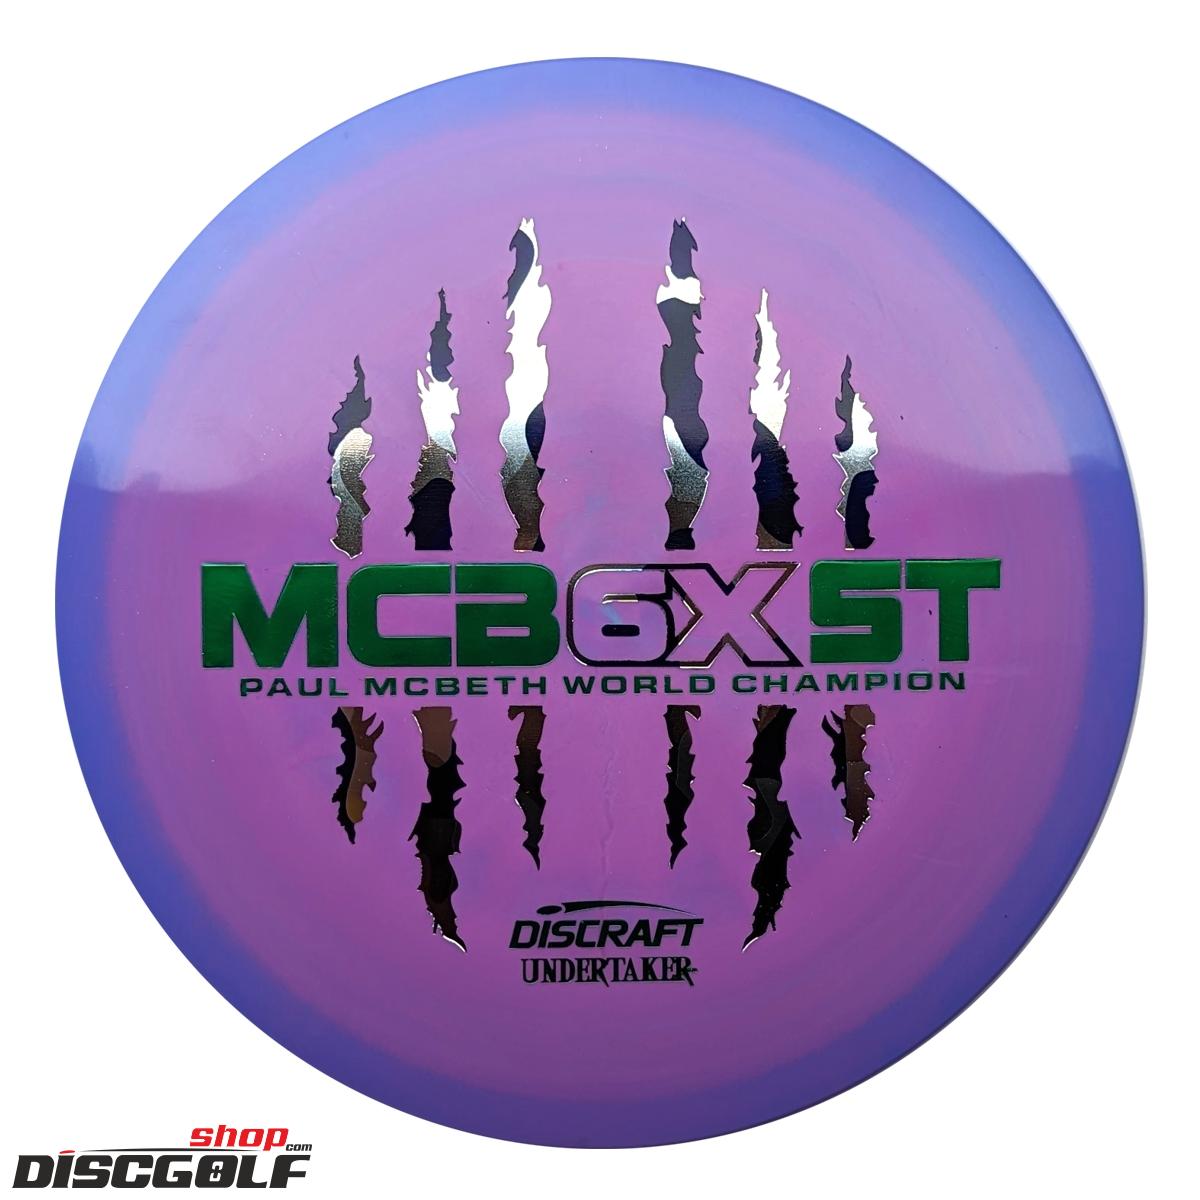 Discraft Undertaker ESP MCB6XST Special Edition (discgolf)